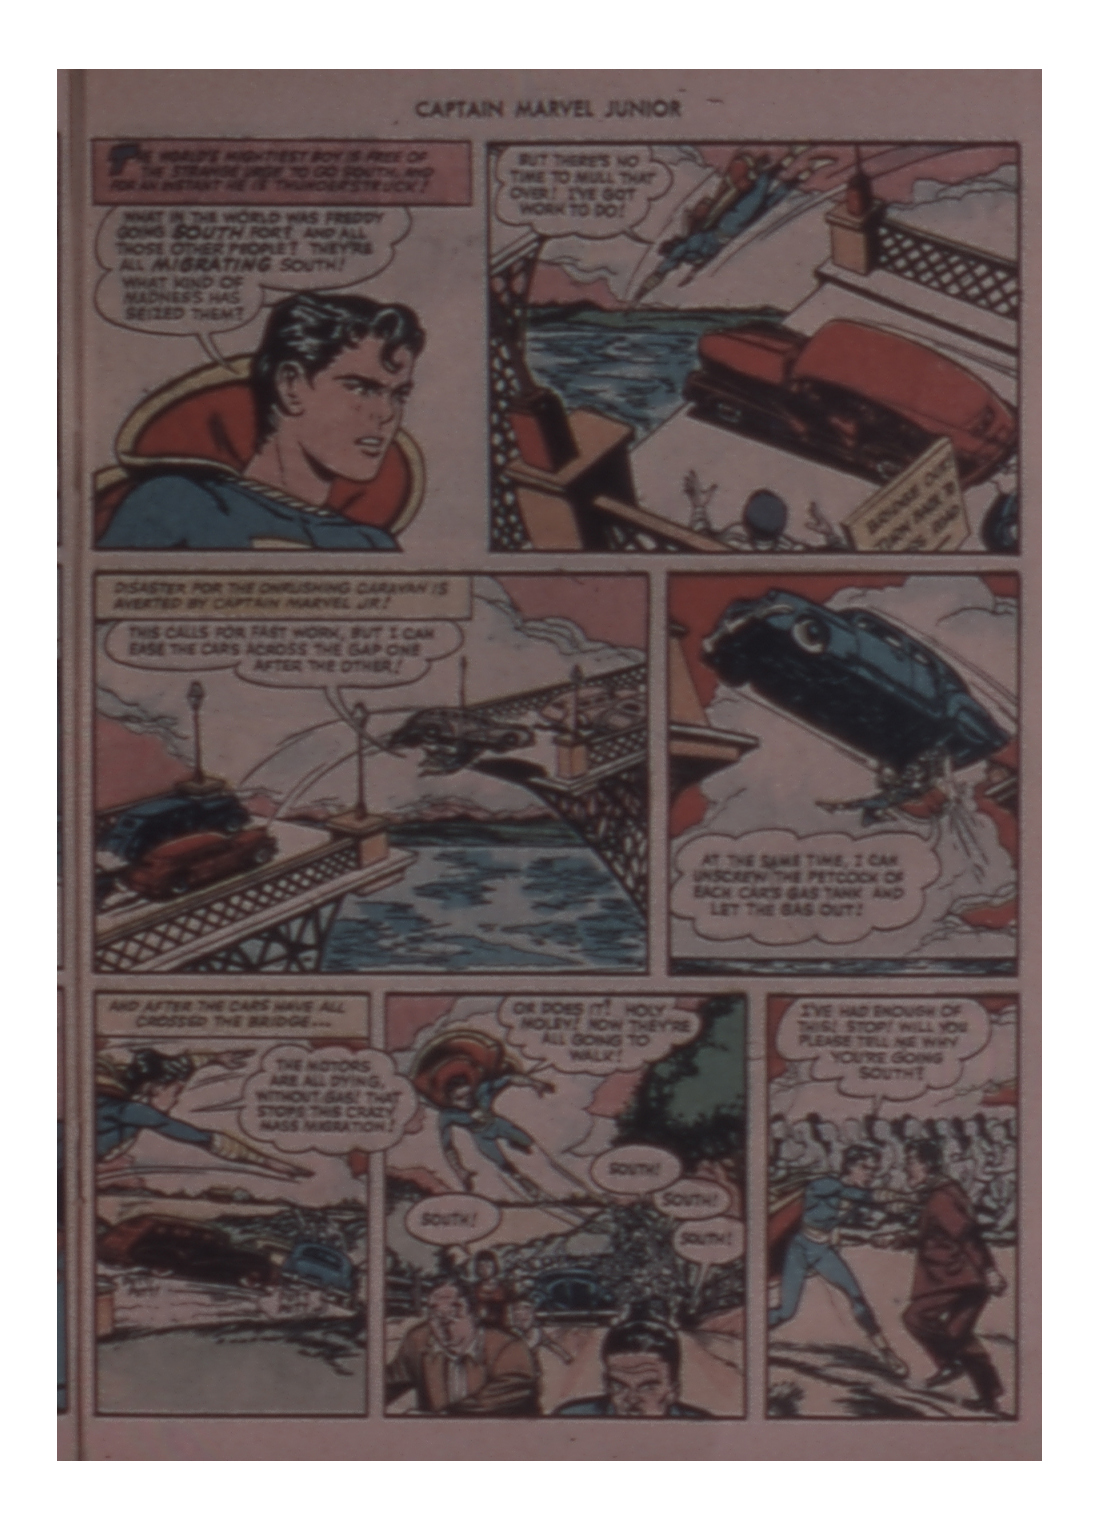 Read online Captain Marvel, Jr. comic -  Issue #74 - 17